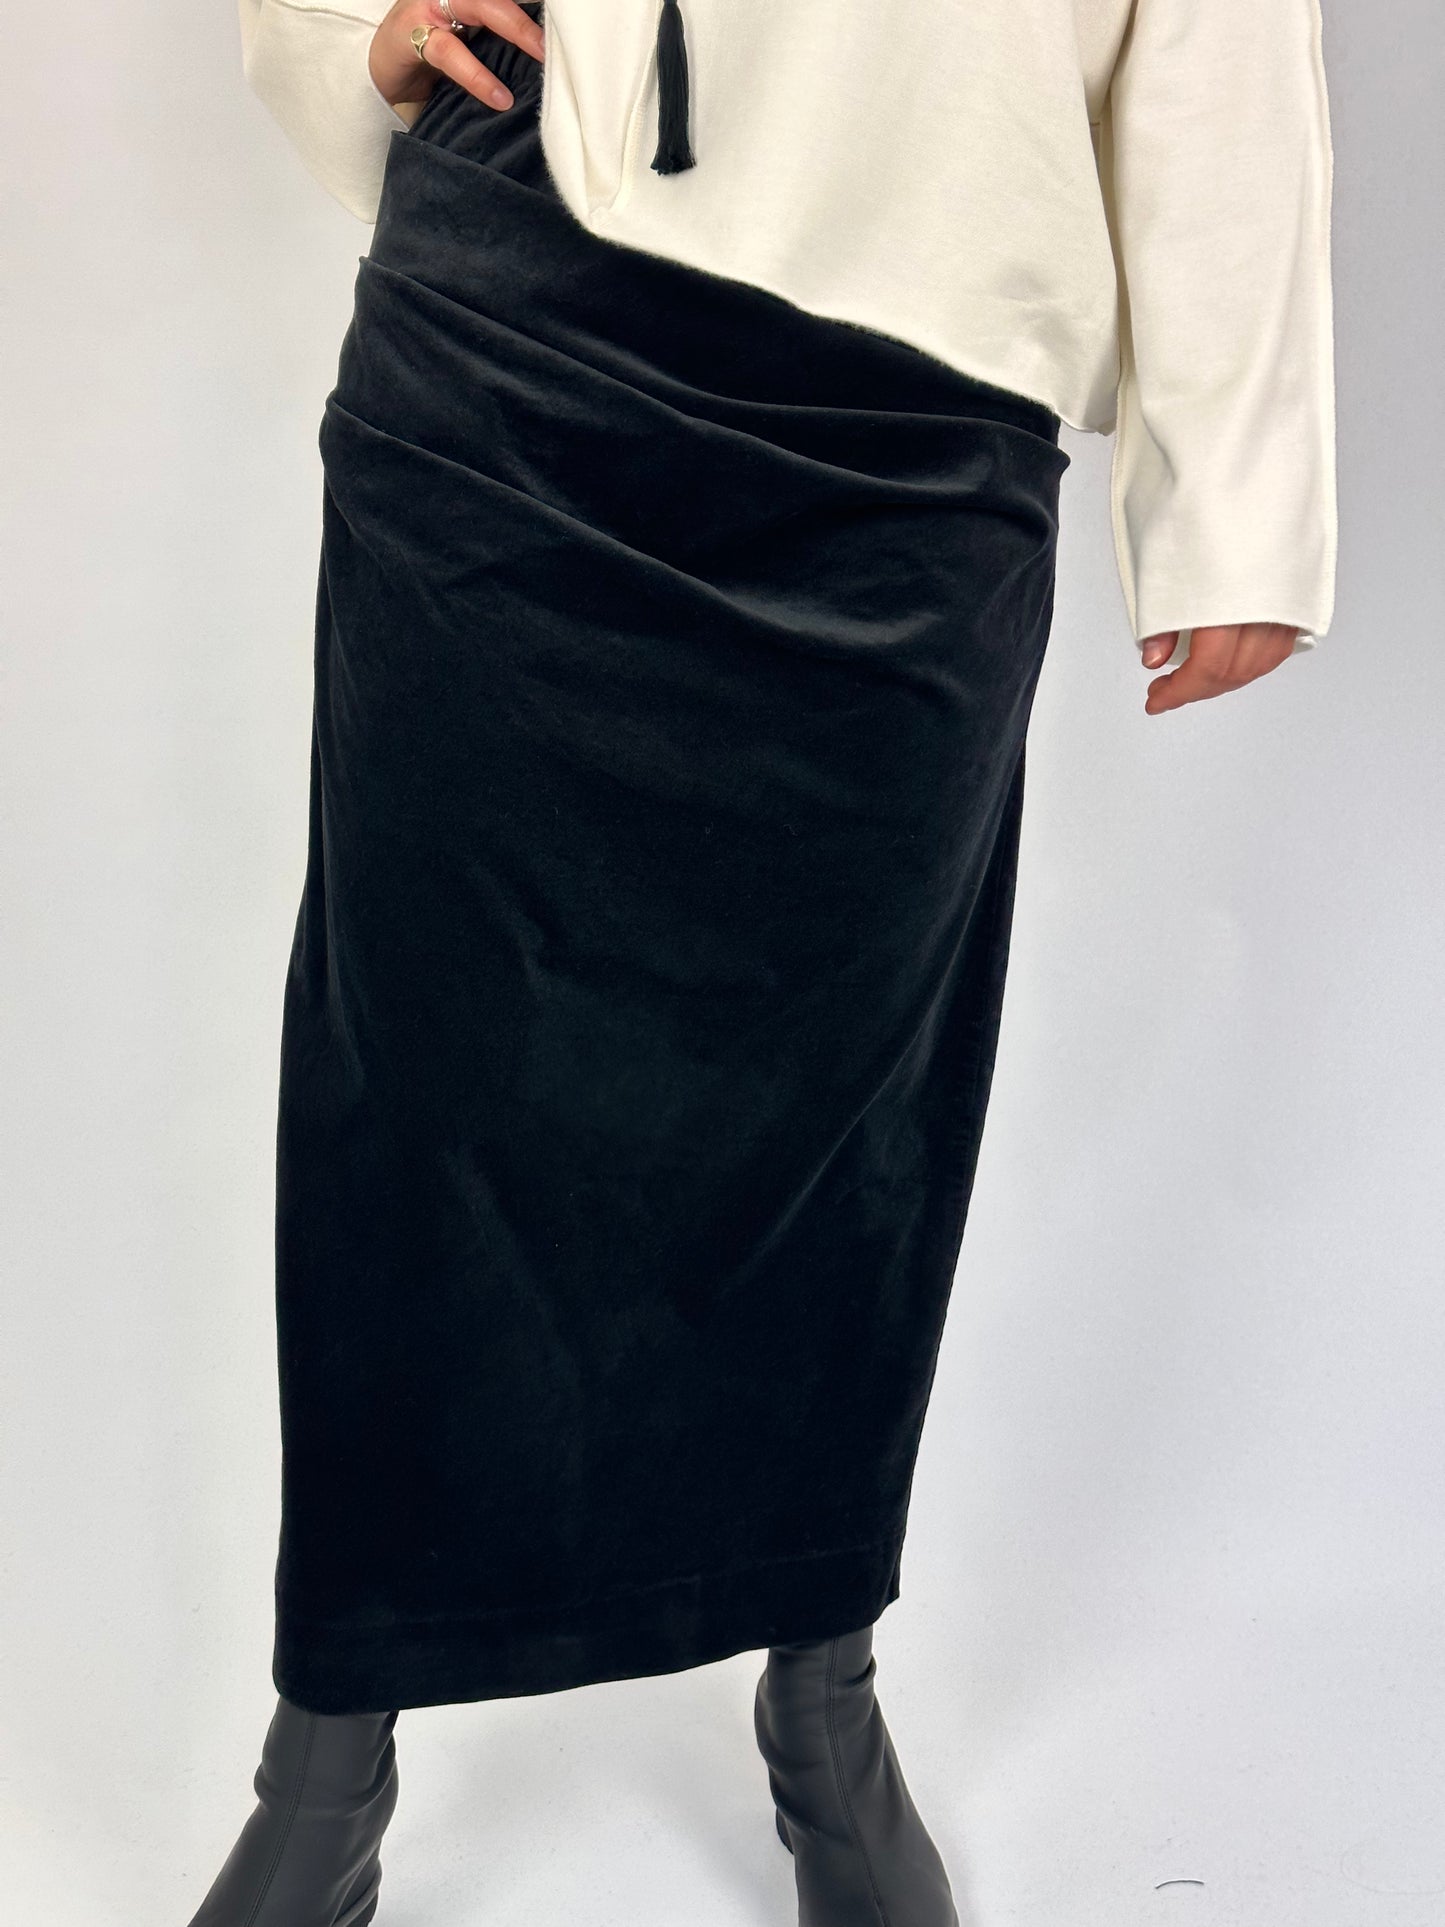 LVL Grande Skirt Black